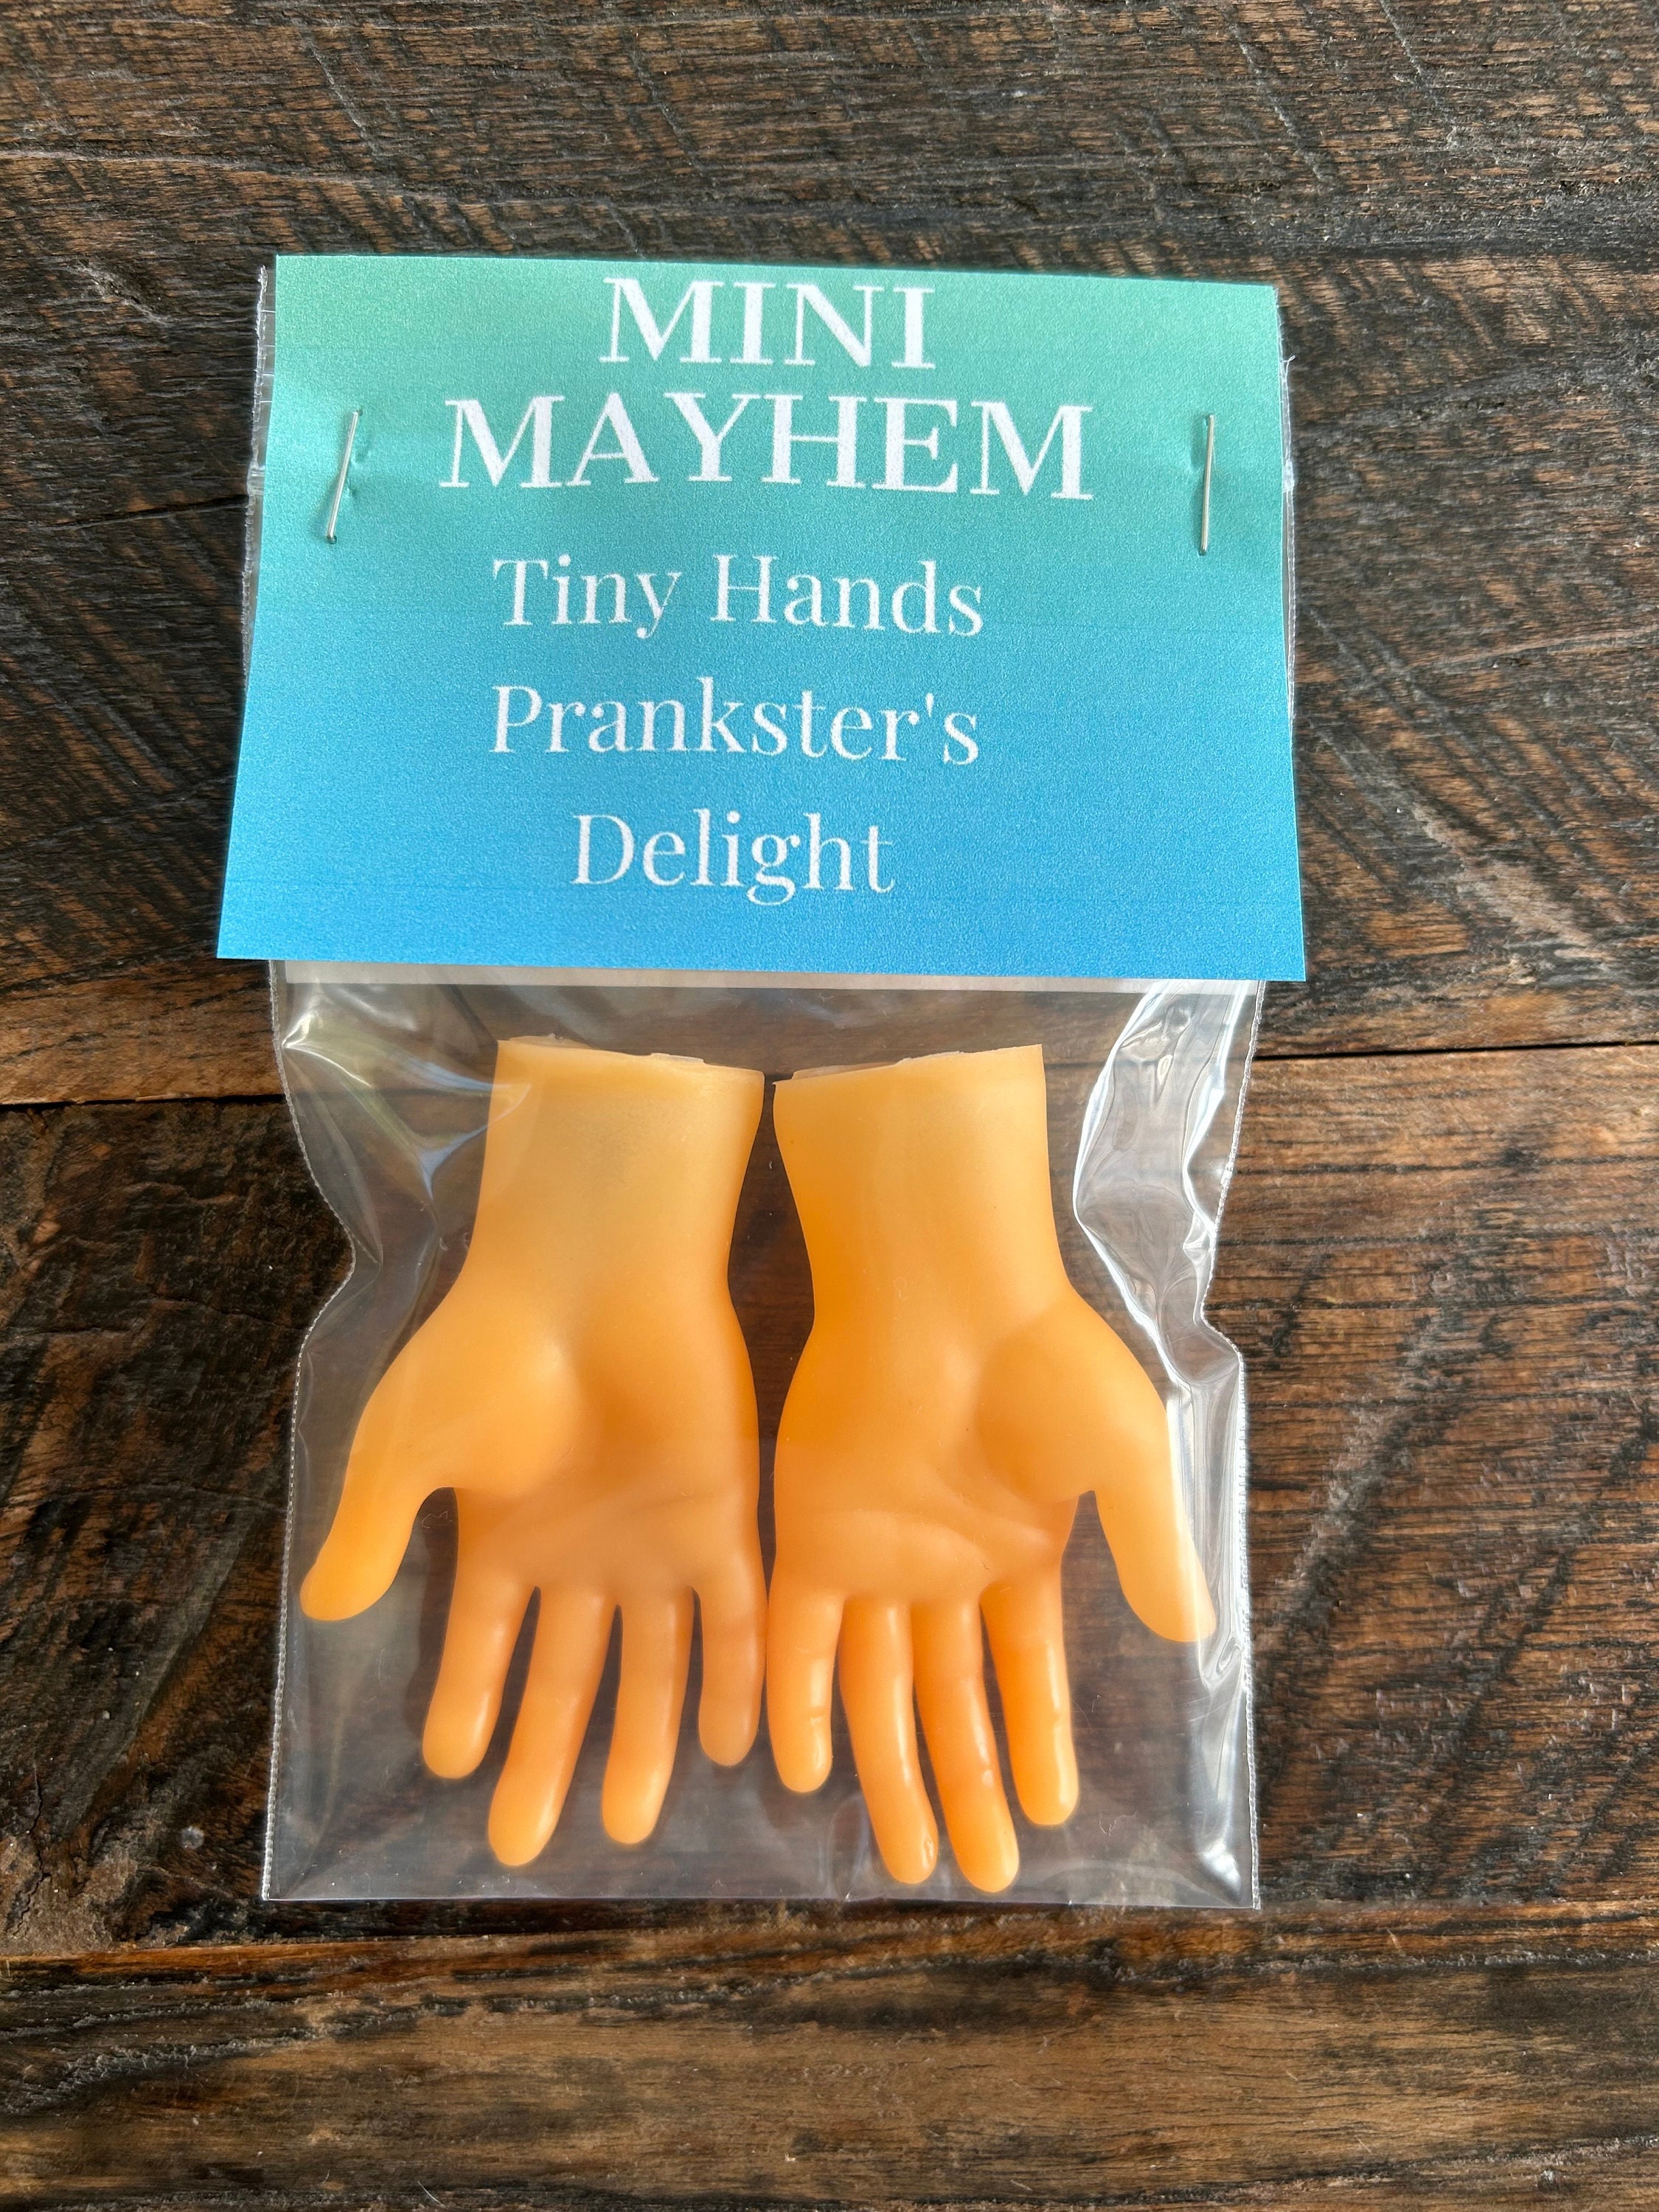 Set of Rubber Finger Hands for Finger Hands Mini Puppets Small Hand Model  Toys